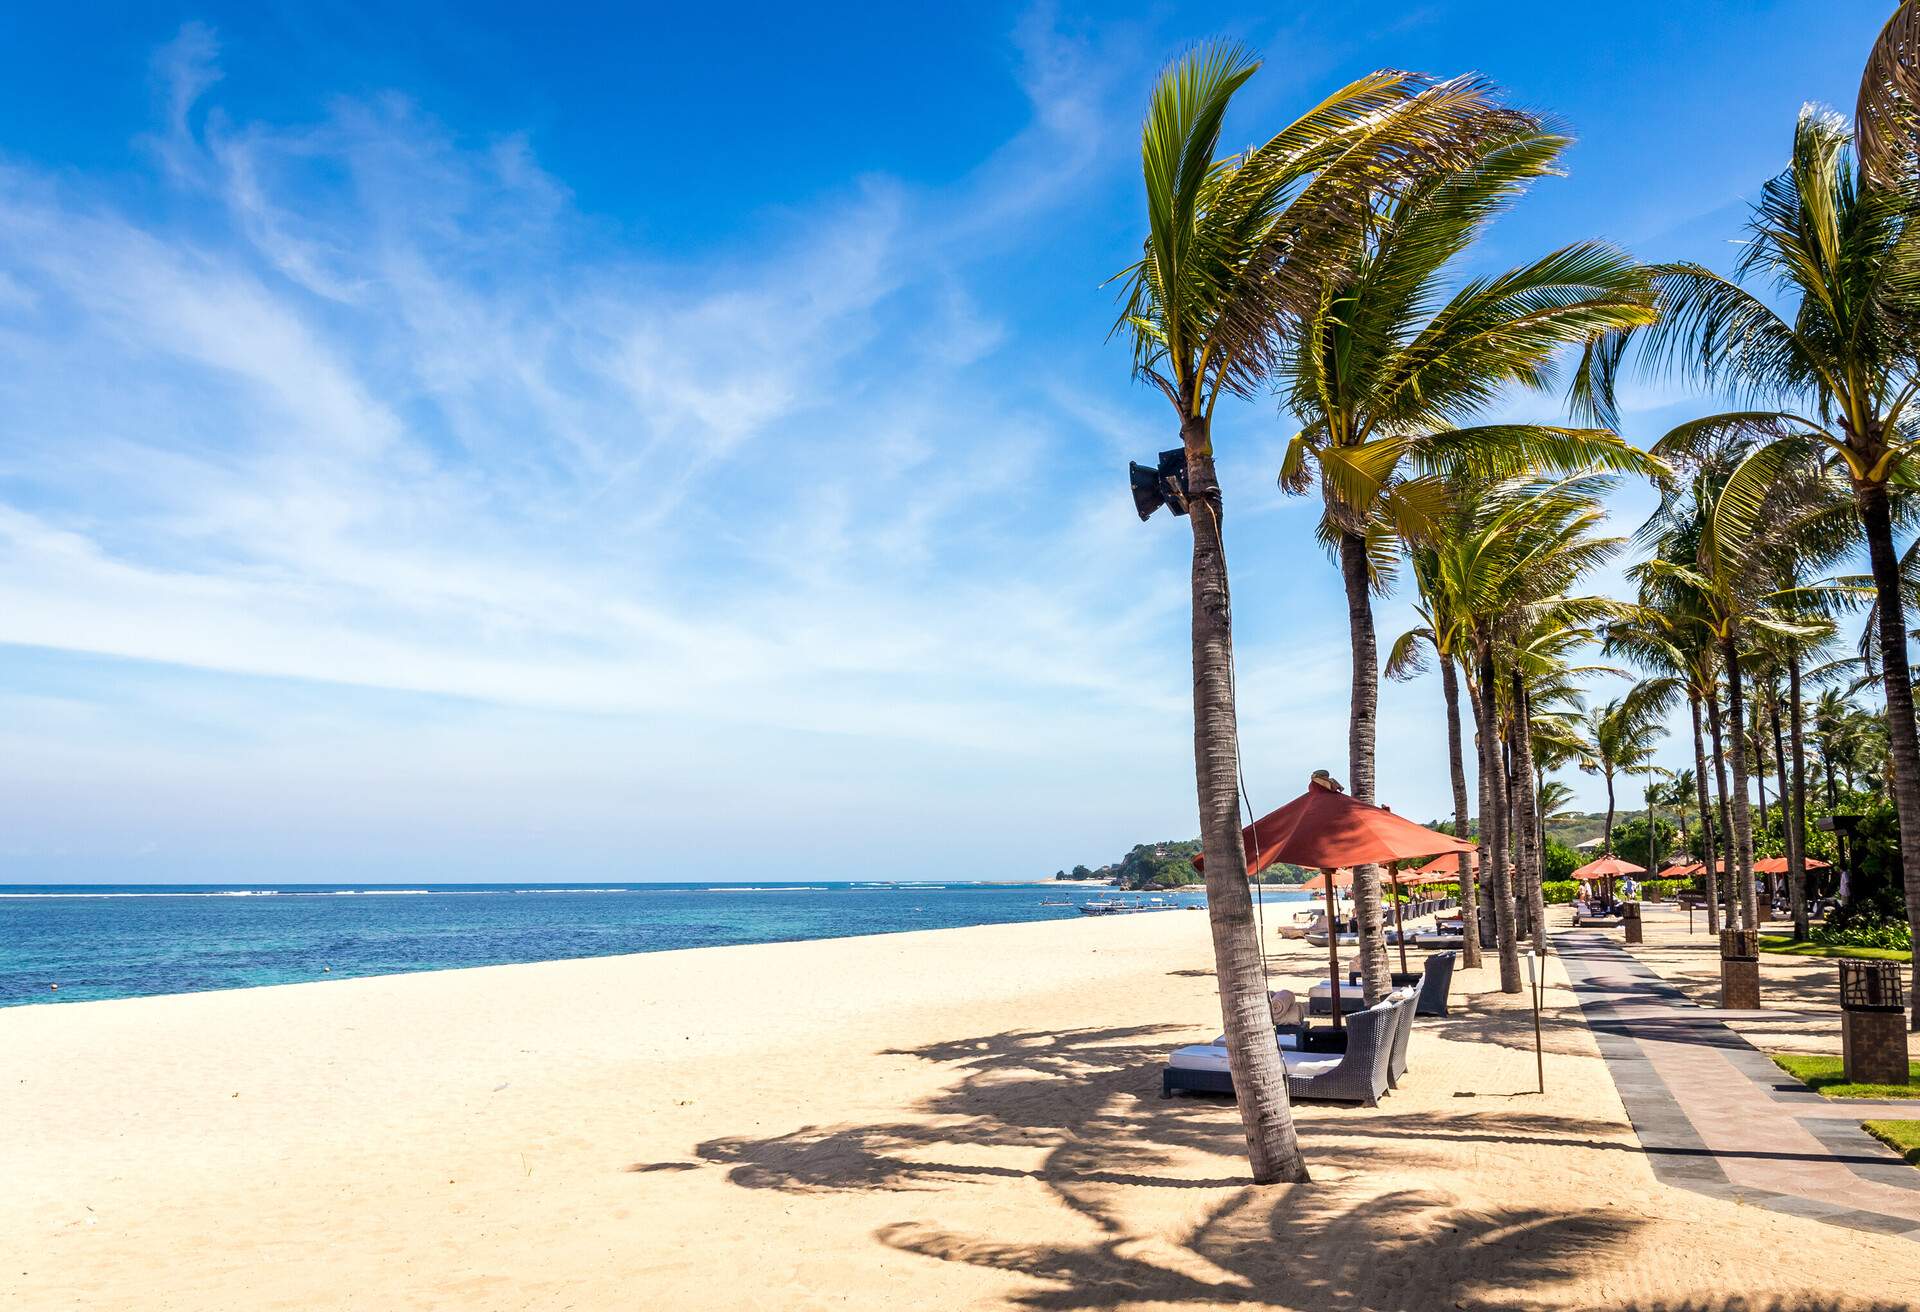 Paradise Geger beach on Bali island in Indonesia 